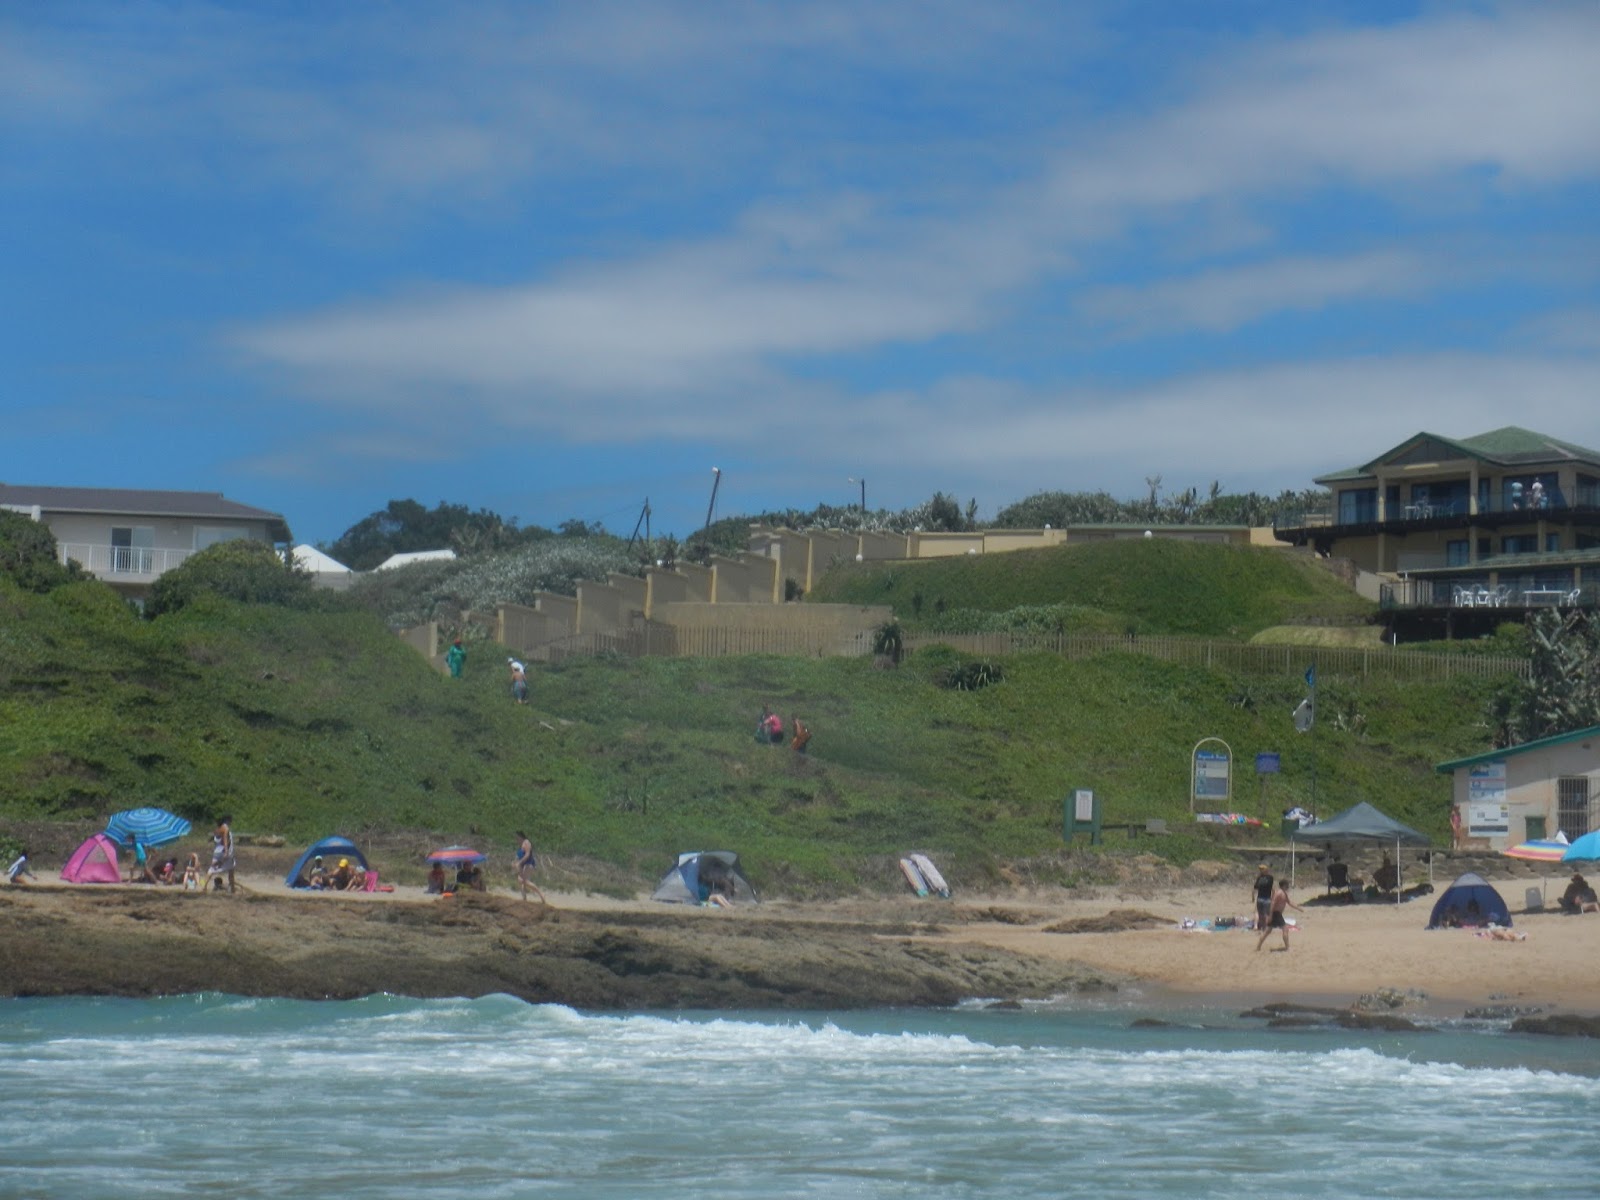 Fotografija Umzumbe beach nahaja se v naravnem okolju